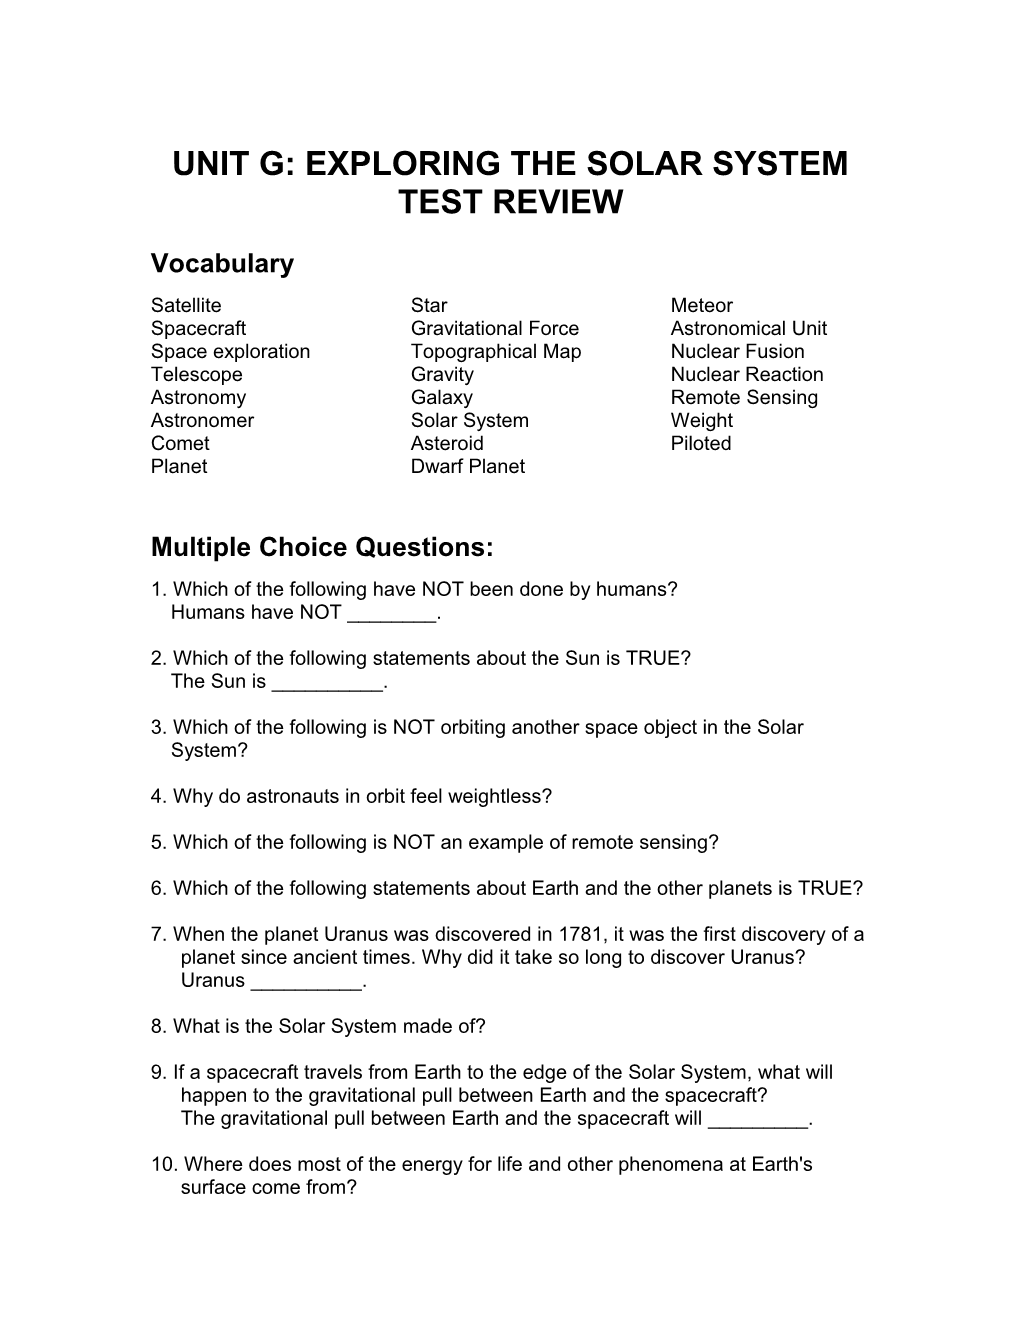 Unit G: Exploring the Solar System Test Review